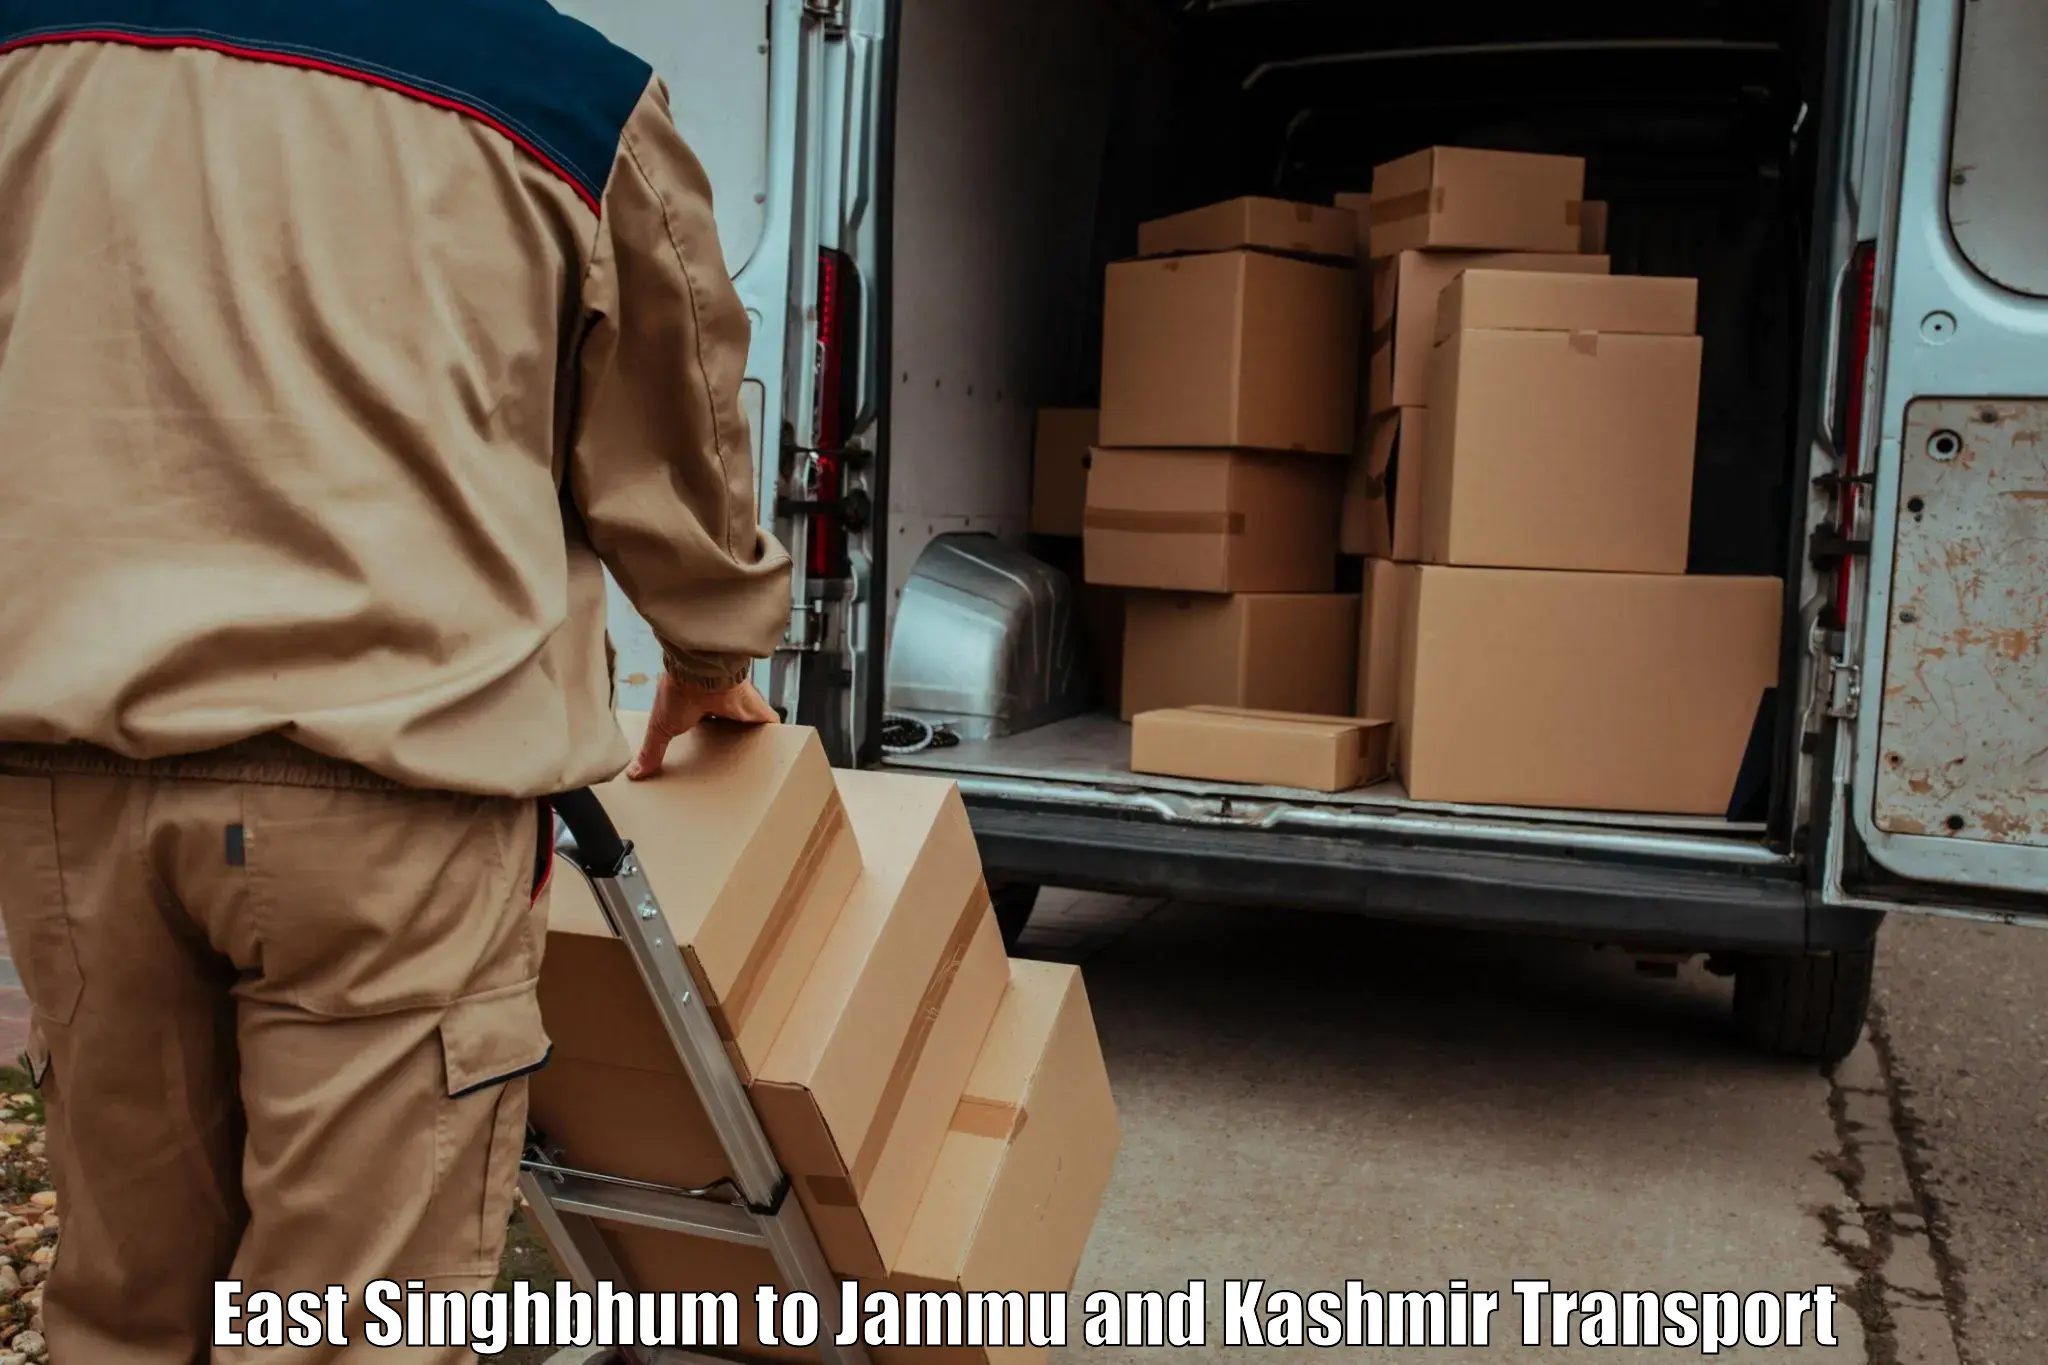 Furniture transport service East Singhbhum to Bhaderwah